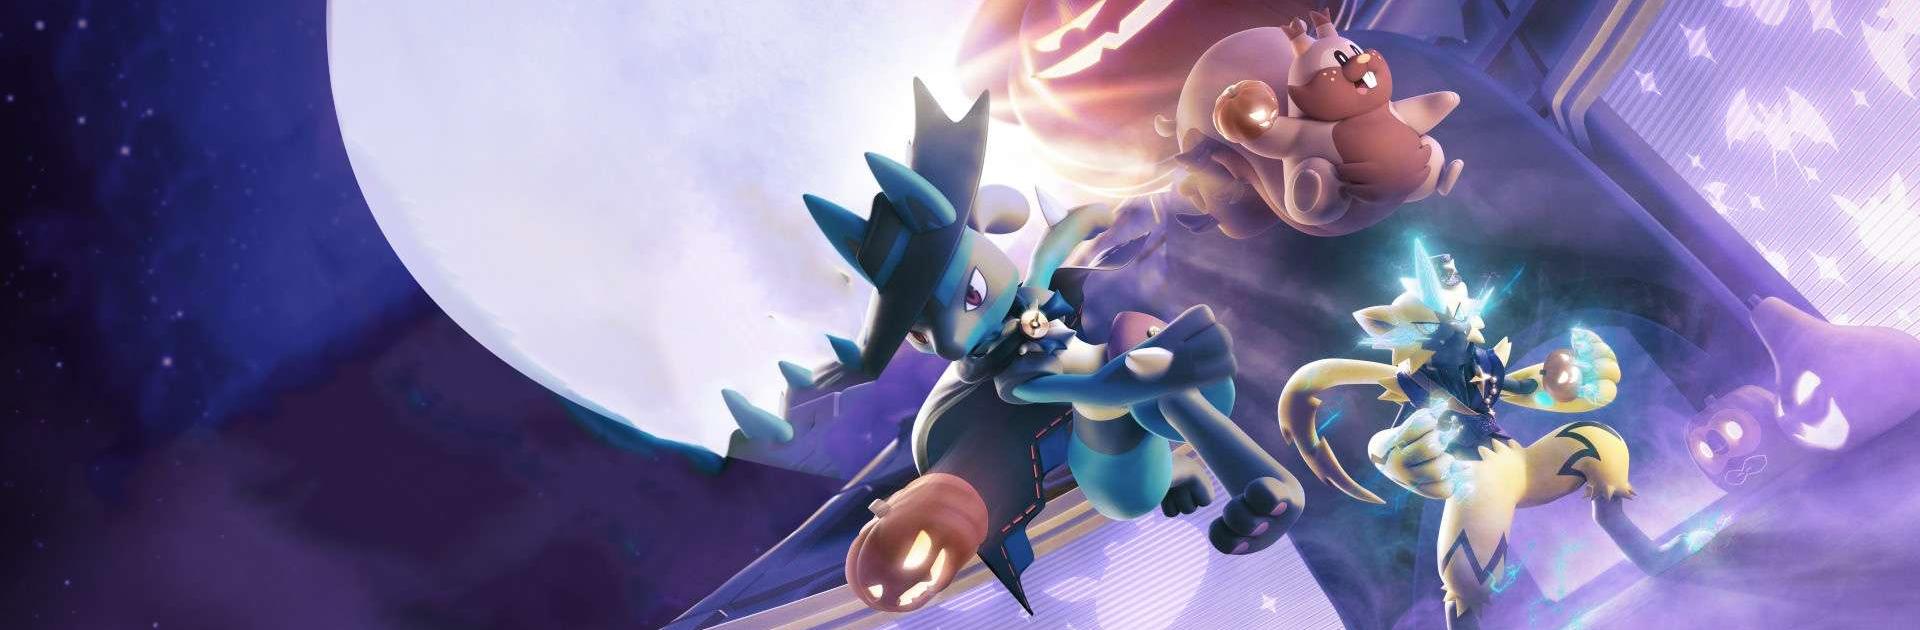 Pokémon UNITE Strategy: Wild Pokémon Battle Tactics in 5-on-5 Battles